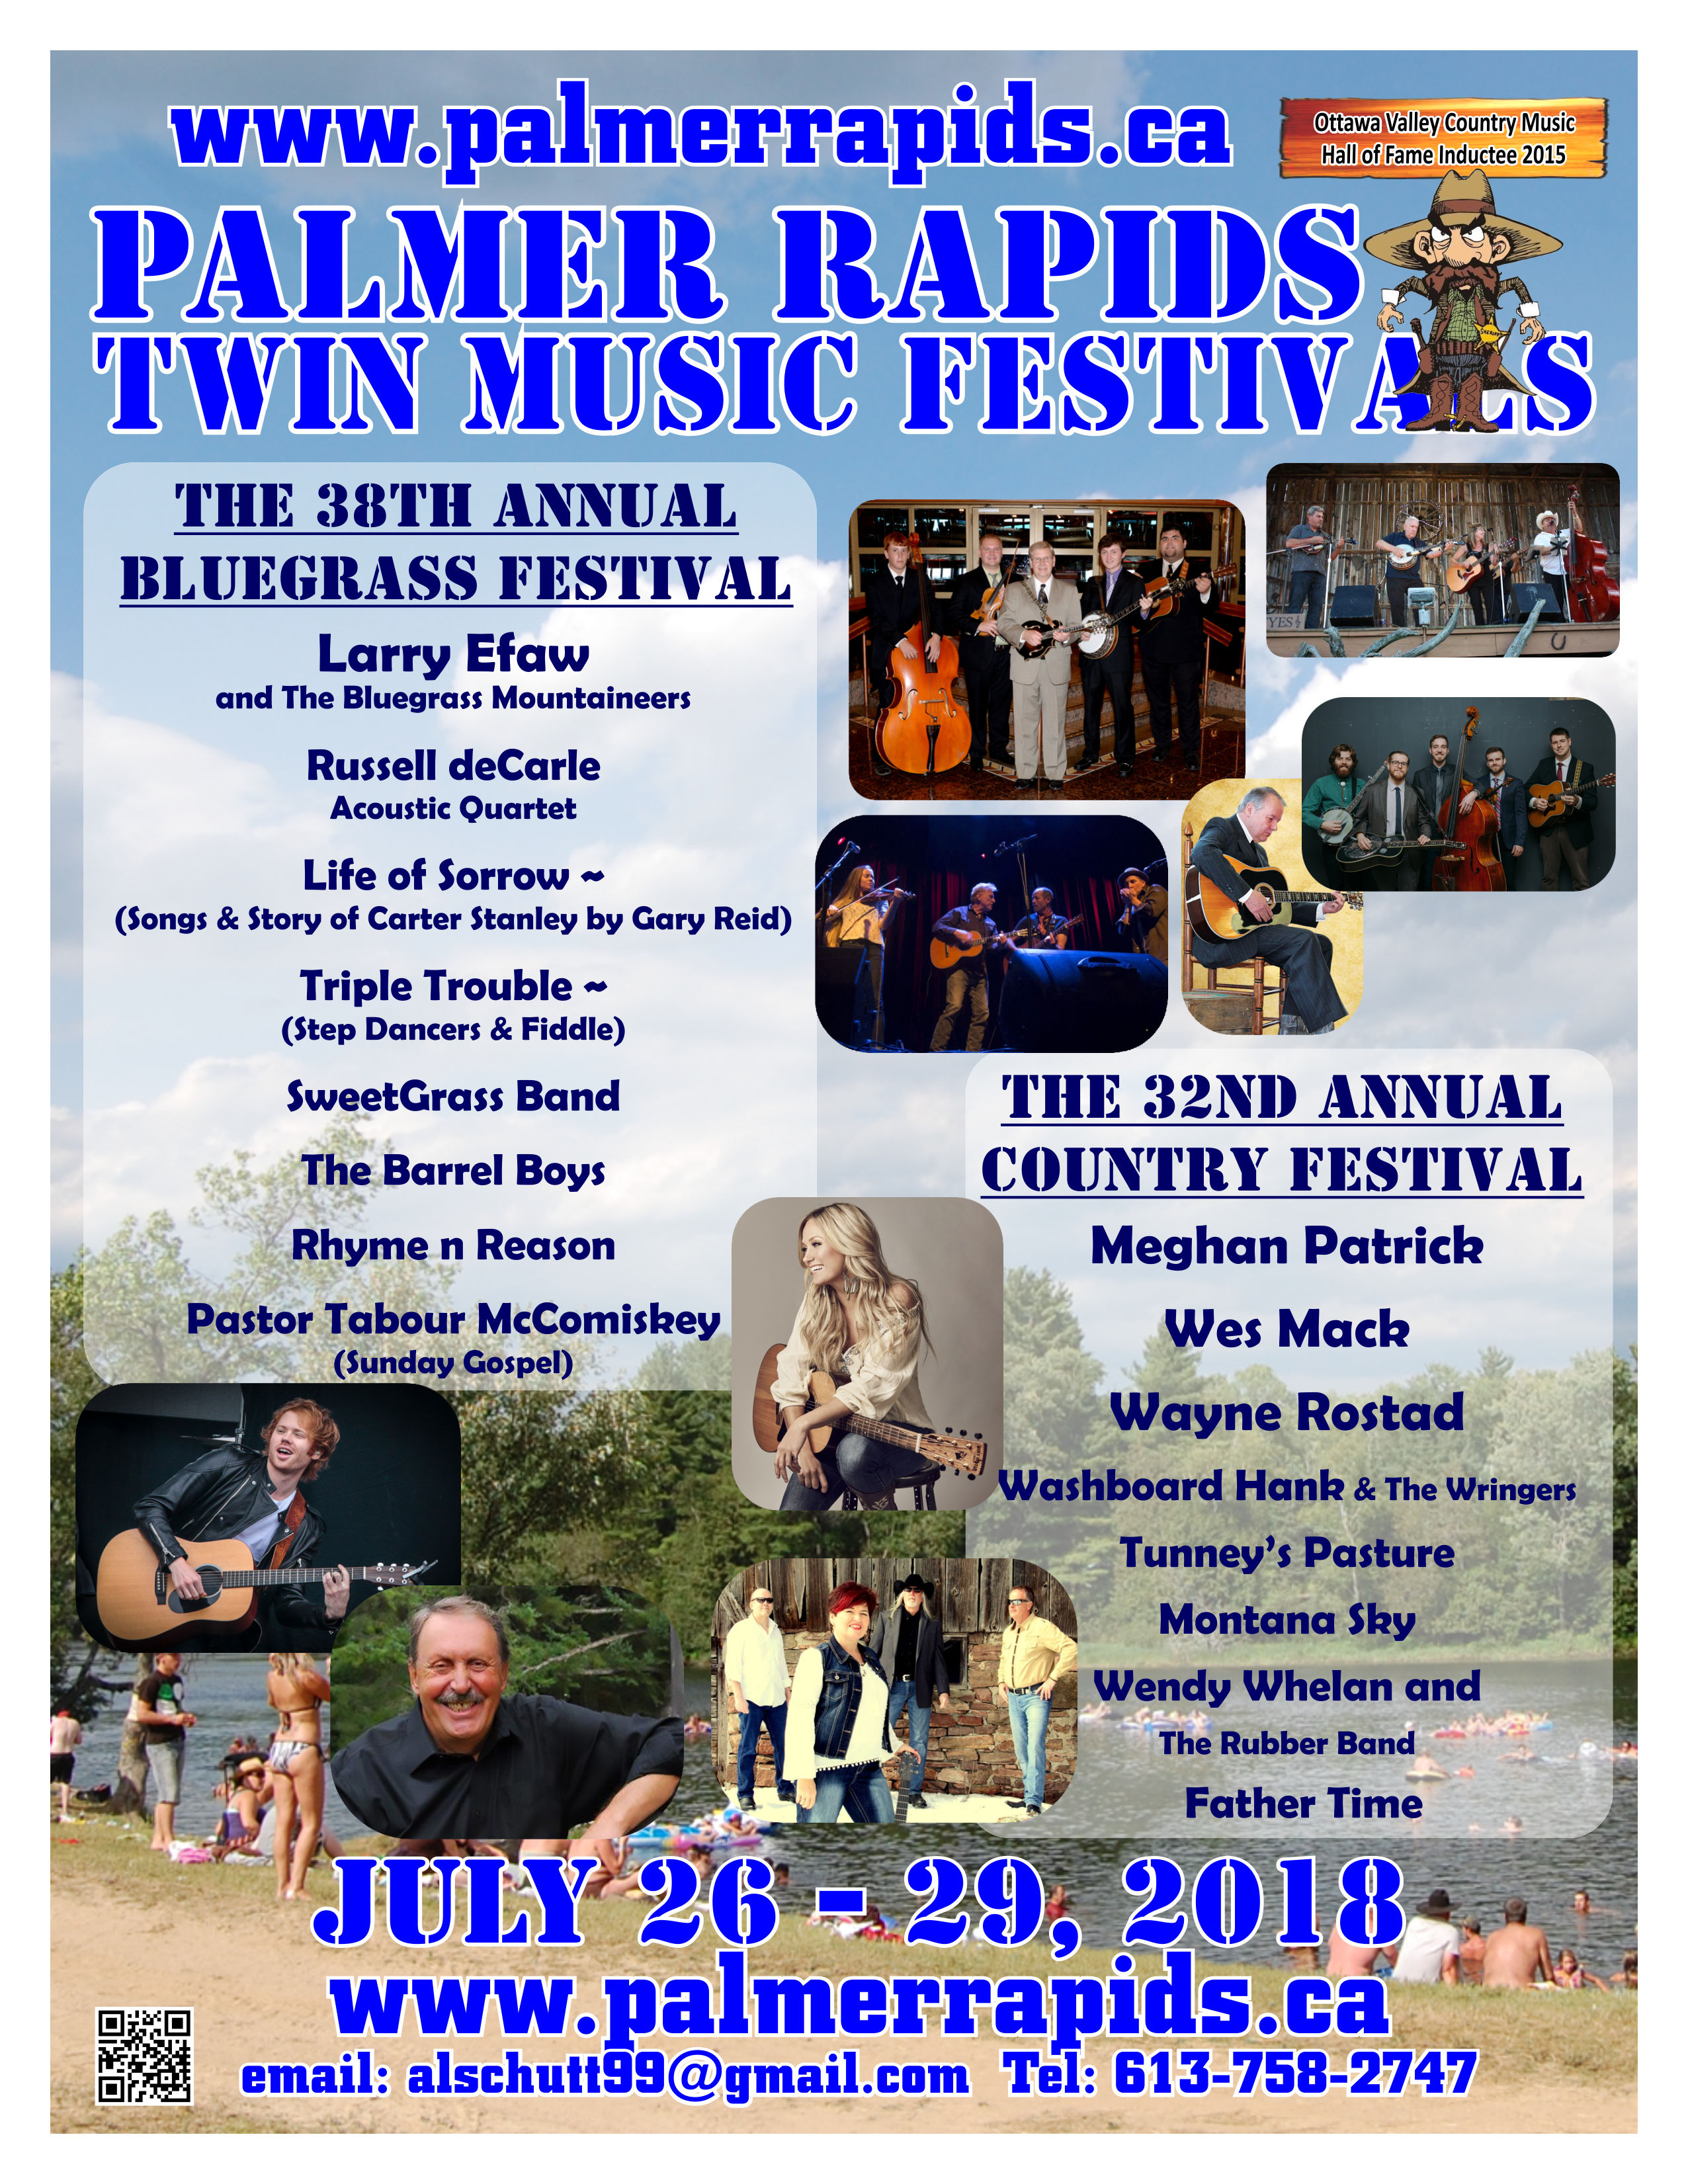 Palmer Rapids Twin Music Festival 2018 Festival Flyer